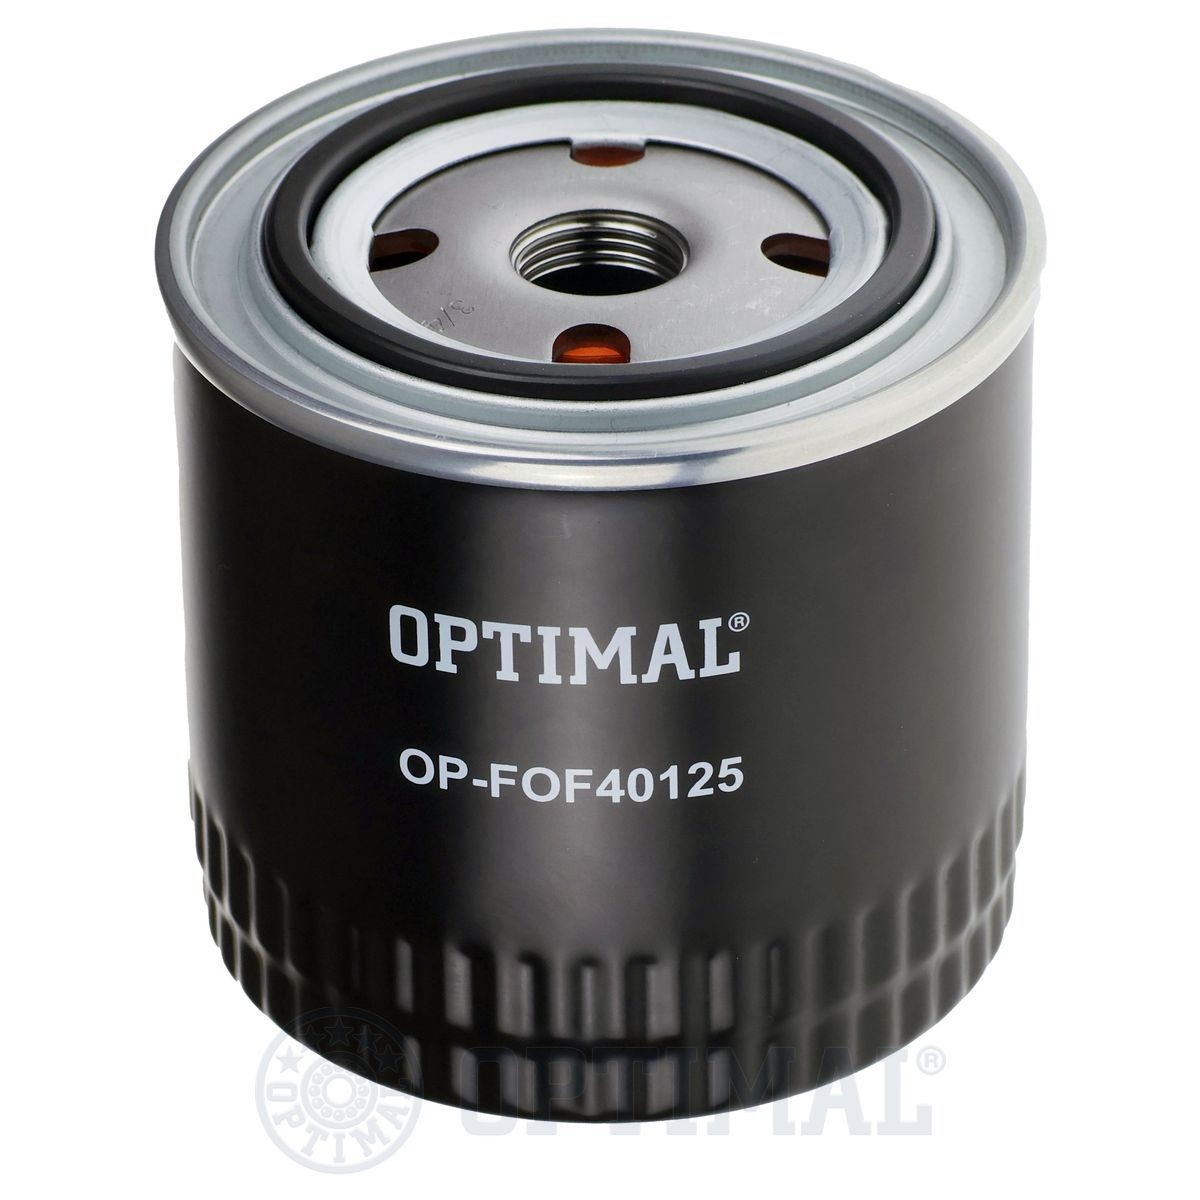 OPTIMAL 3/4-16 UNF-1B, mit einem Rücklaufsperrventil, Anschraubfilter Innendurchmesser 2: 72, 63mm, Ø: 96, 93mm, Höhe: 96mm Ölfilter OP-FOF40125 kaufen